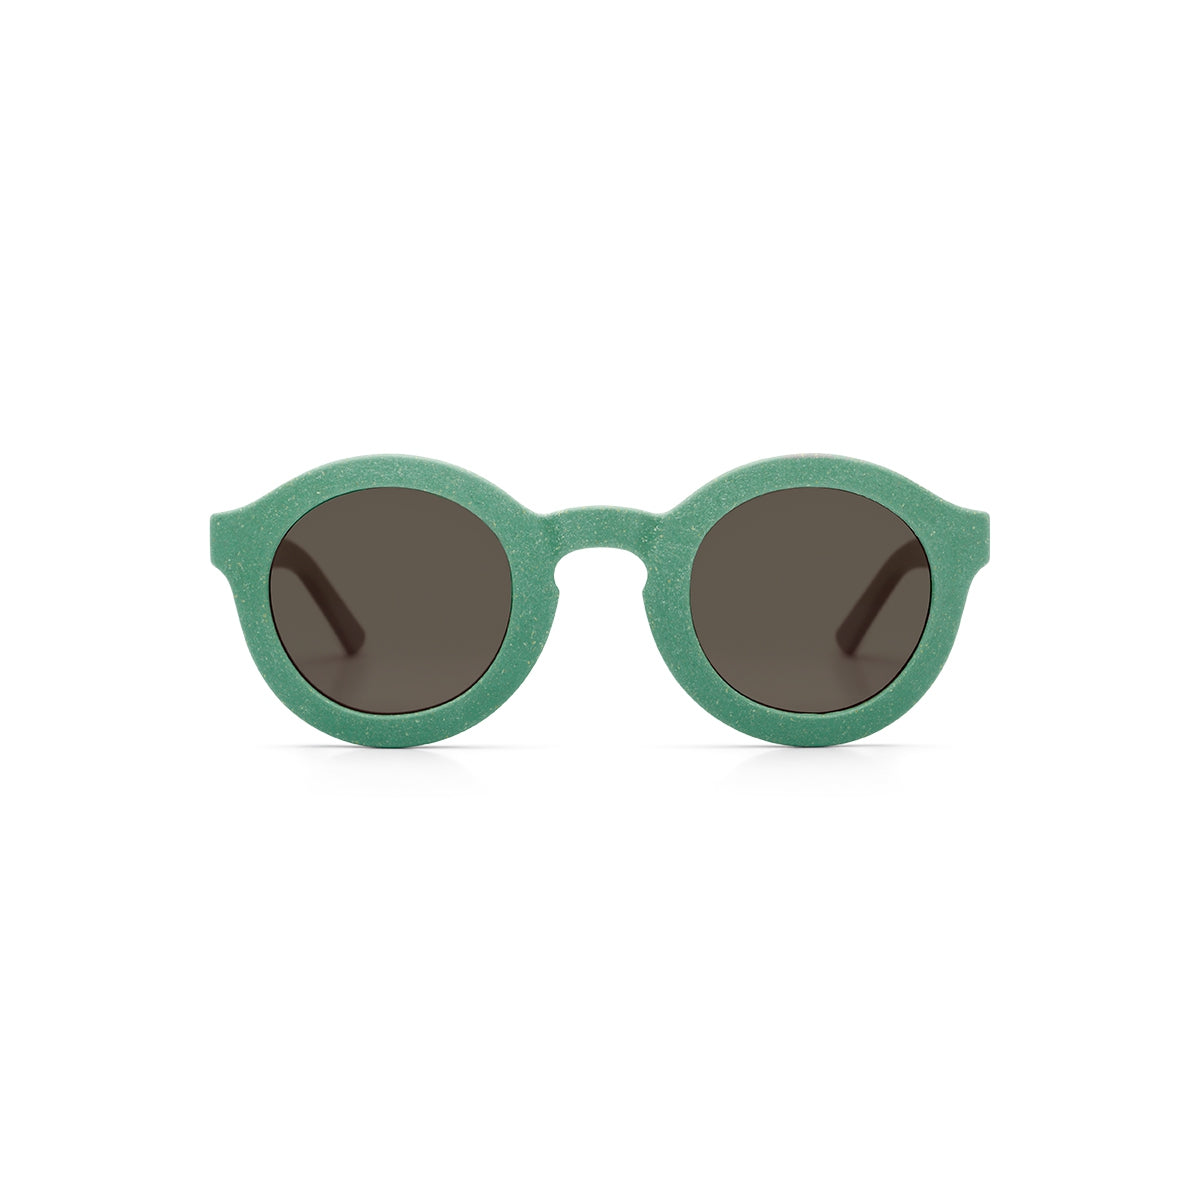 Kindersonnenbrille - Cream 01 | Bright Green - Peanut